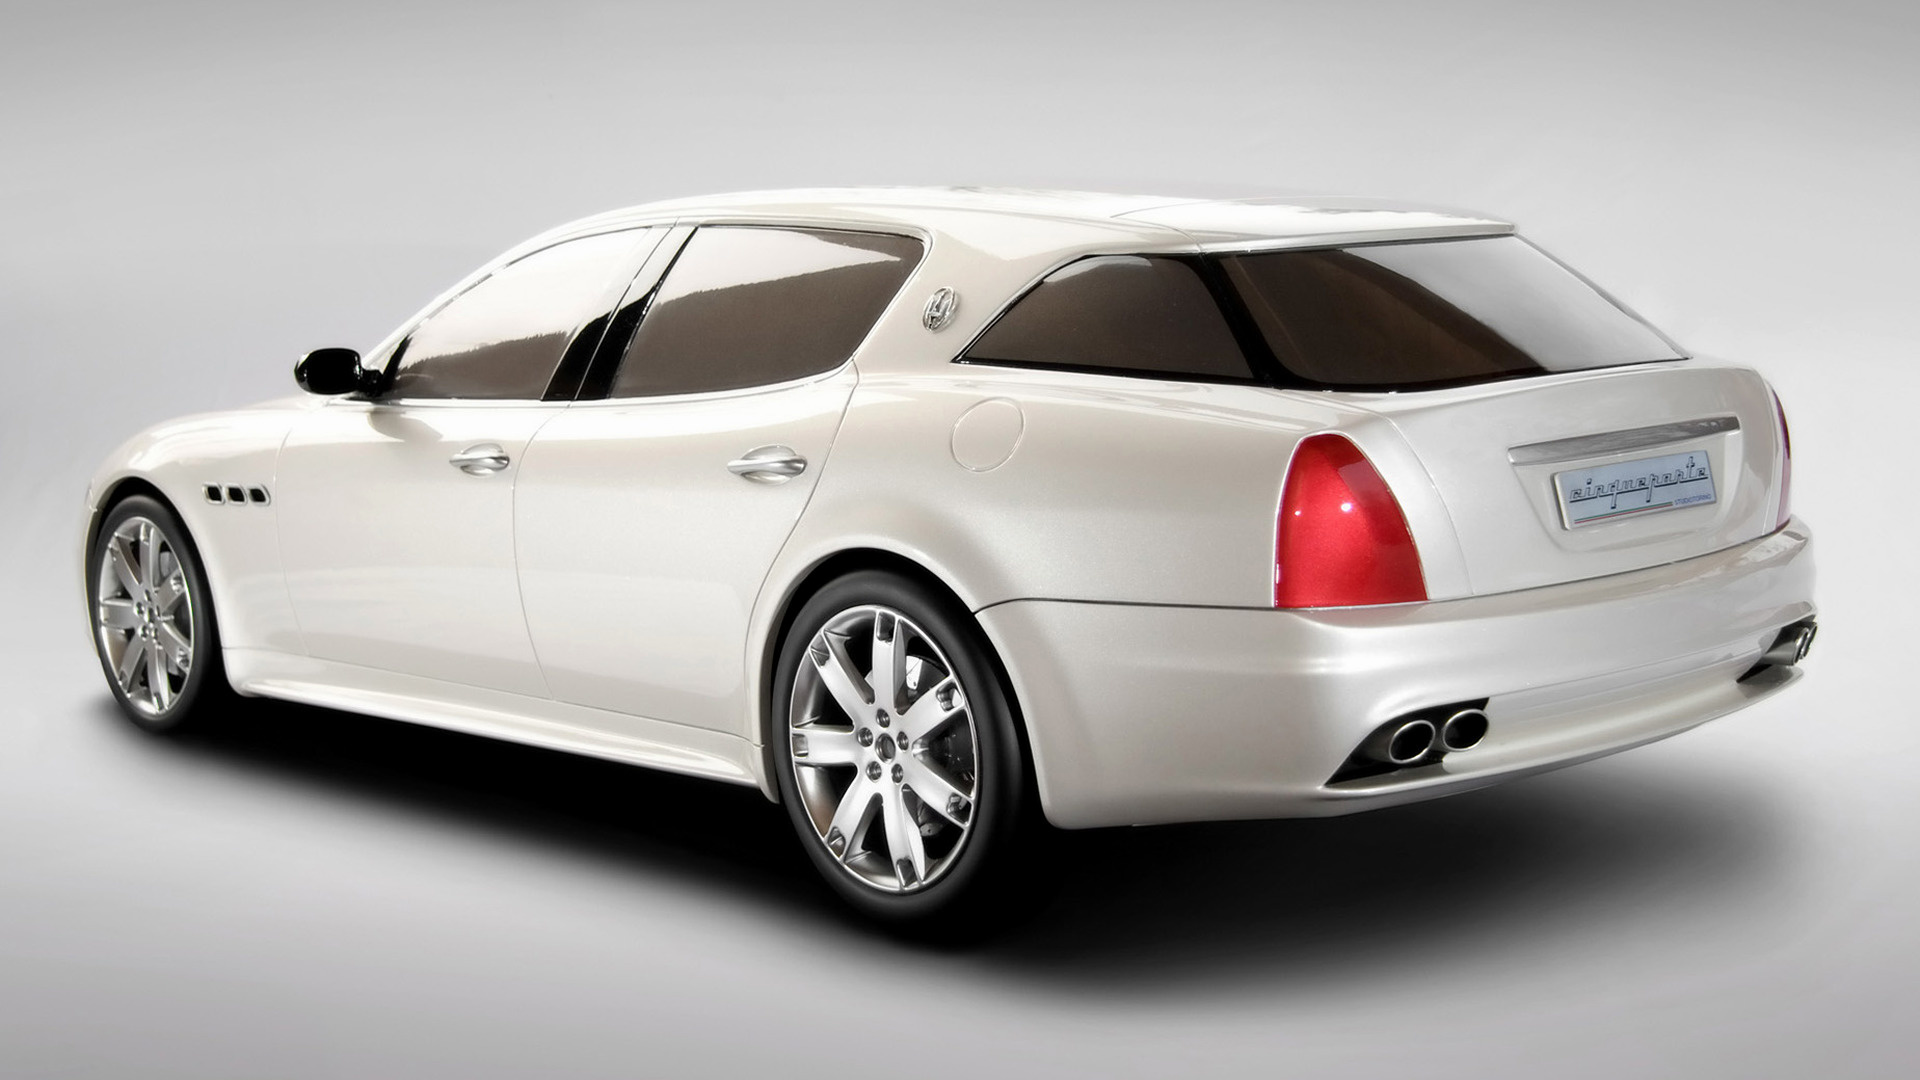 Car Concept Car Full Size Car Luxury Car Maserati Cinqueporte Concept Sports Sedan White Car 1920x1080